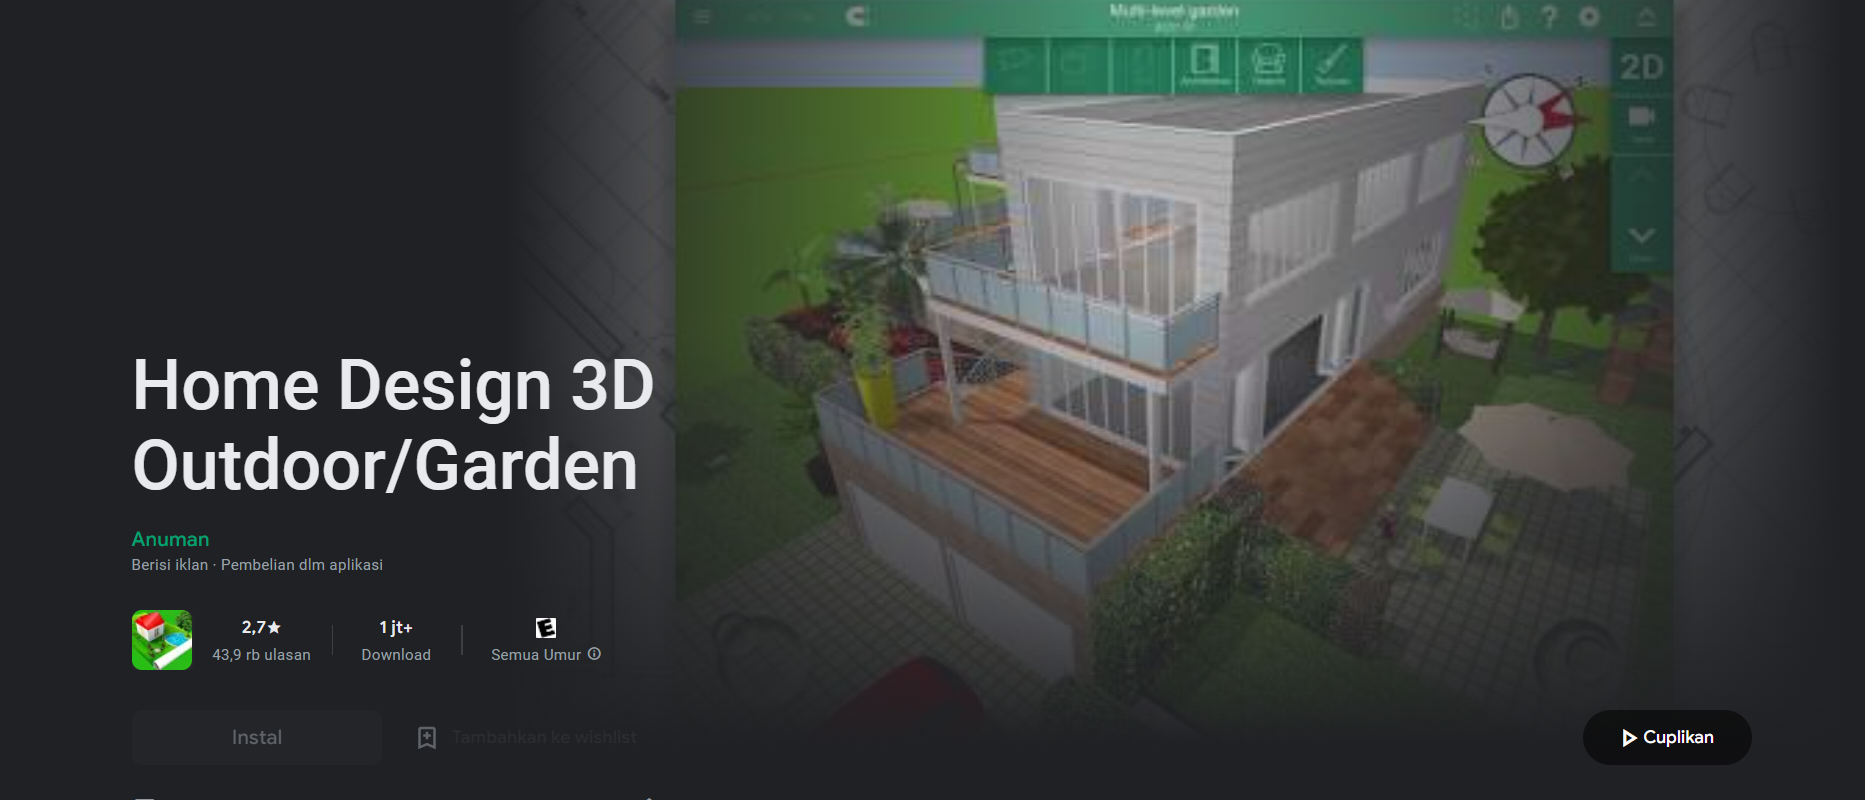 Home Desain 3D Outdoor/Garden